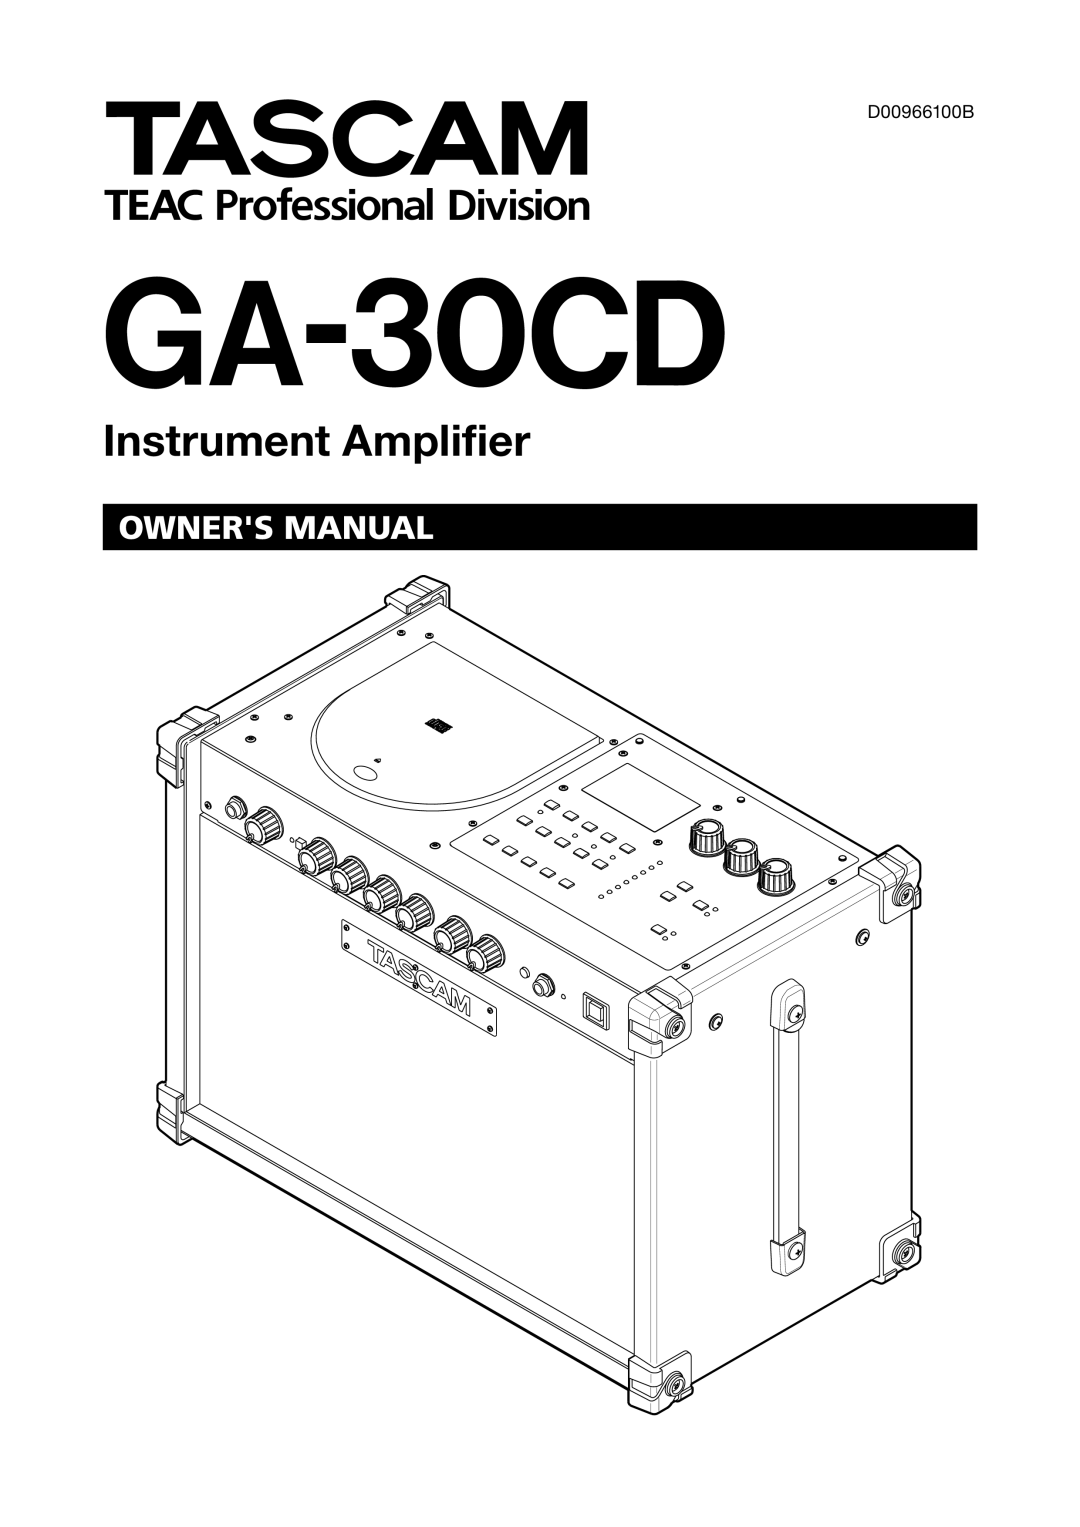 Tascam GA-30CD owner manual Instrument Amplifier 